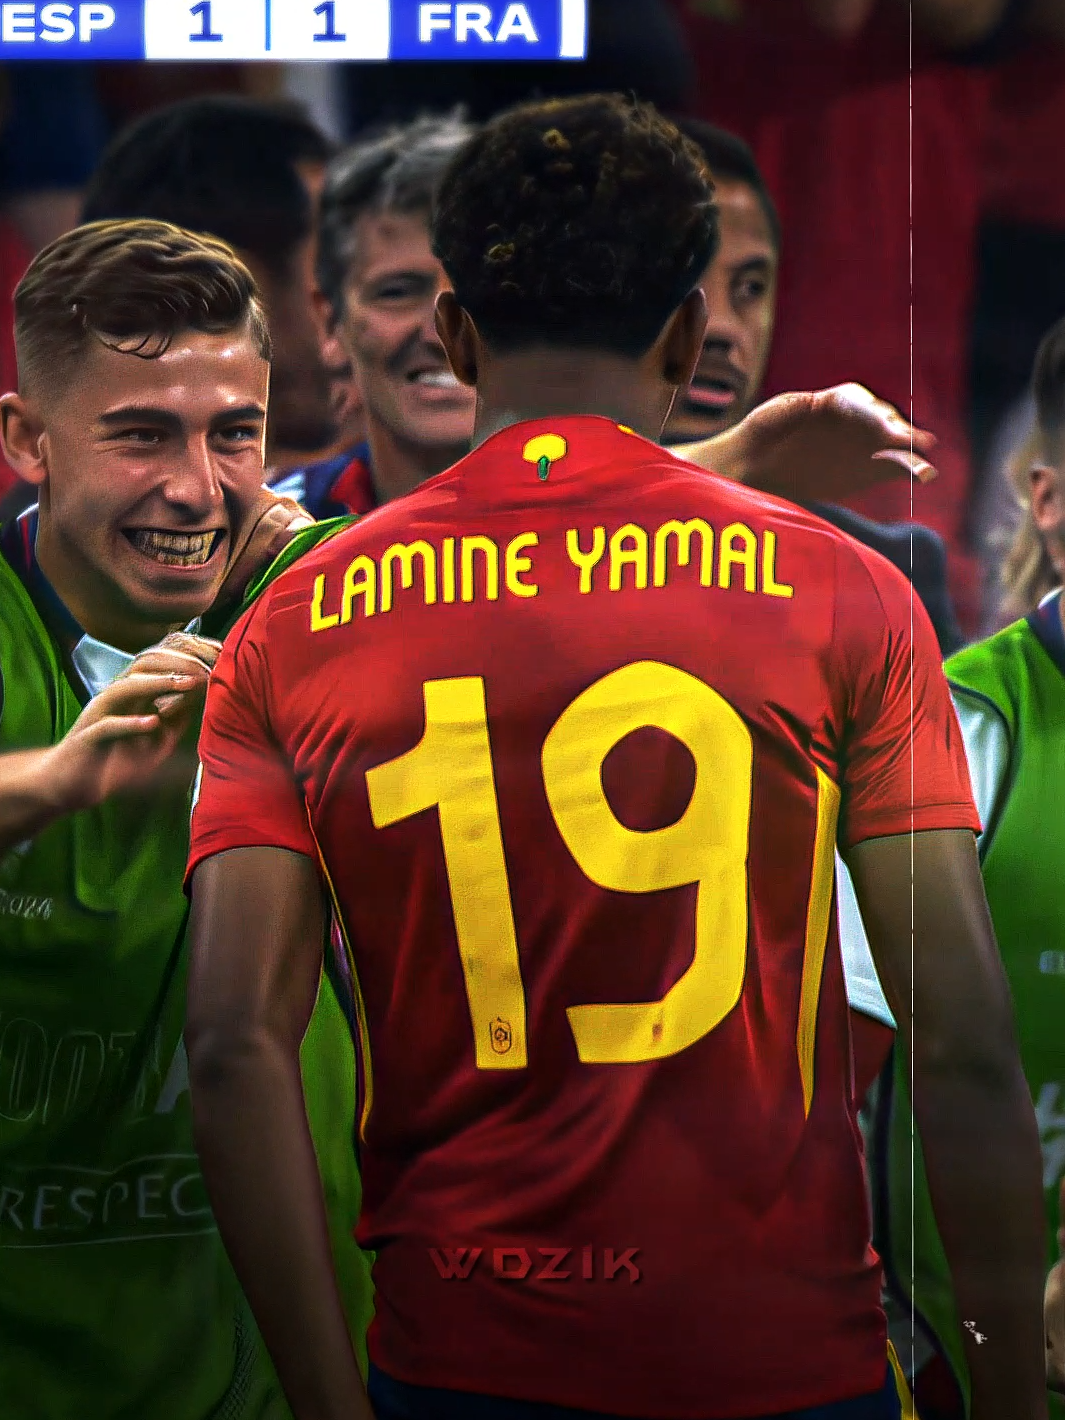 que golaço do Lamine Yamal ☠️|| #yamal #lamineyamal #espanha #eurocopa #aftereffects #edit #fyp